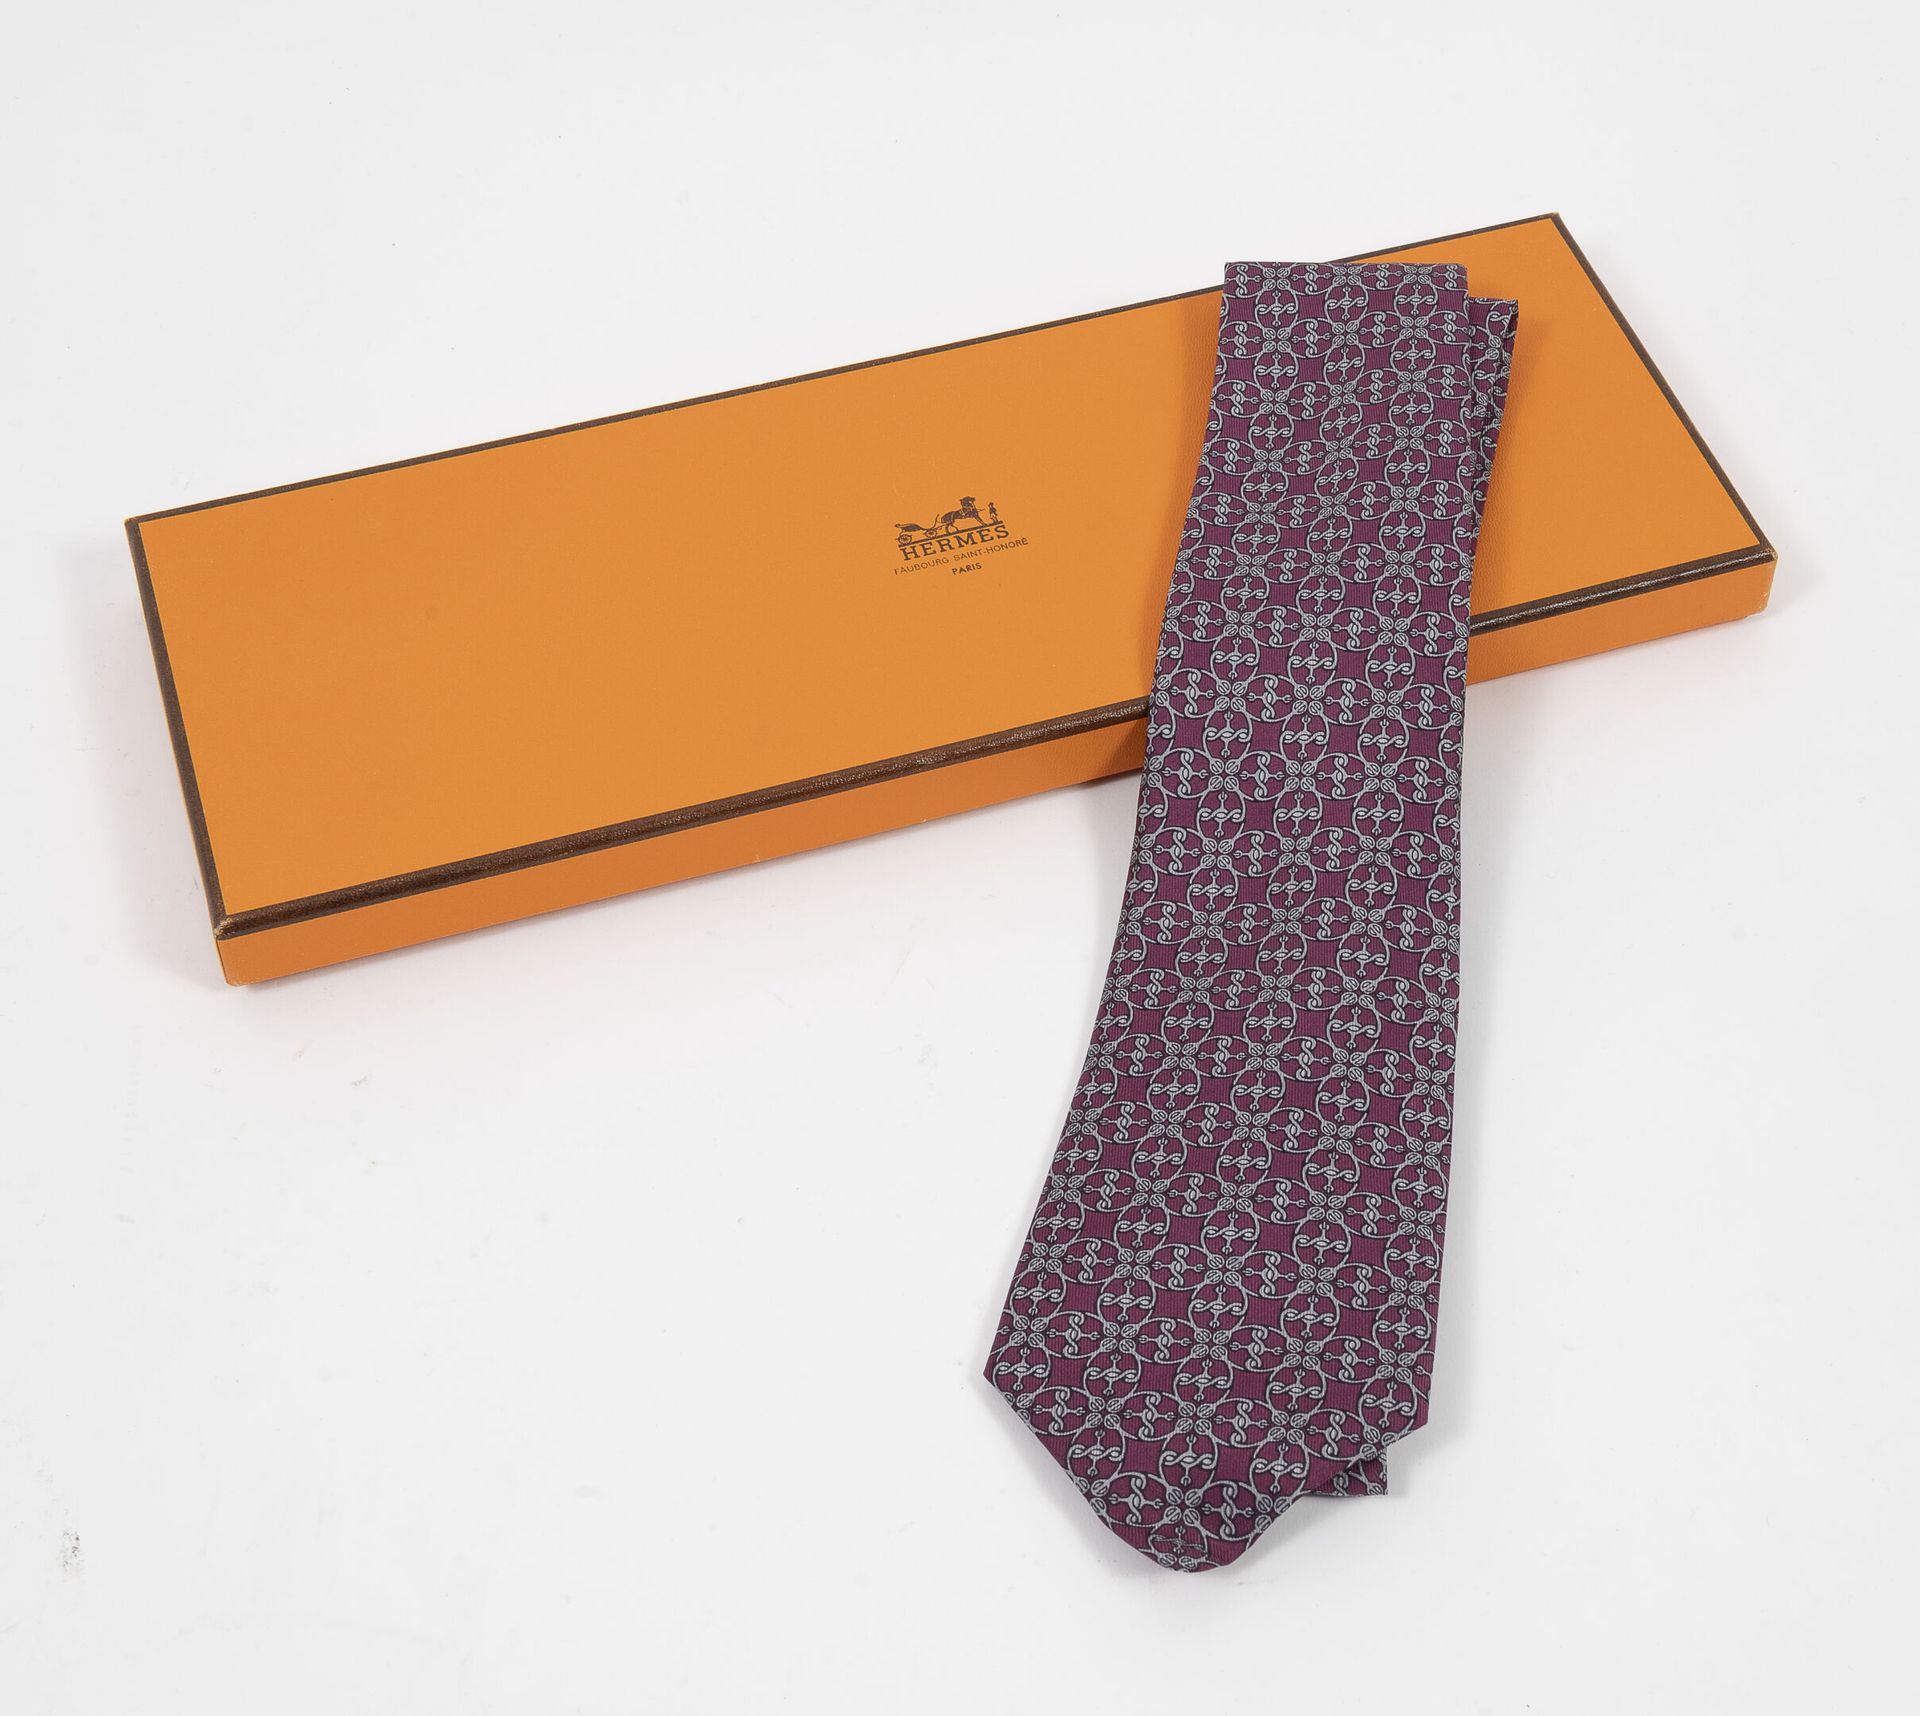 HERMES Paris 晚装斜纹领带，紫色背景上有铁艺图案。

签名。

最大宽度：8.5厘米。

新的条件。

在其原来的盒子里。